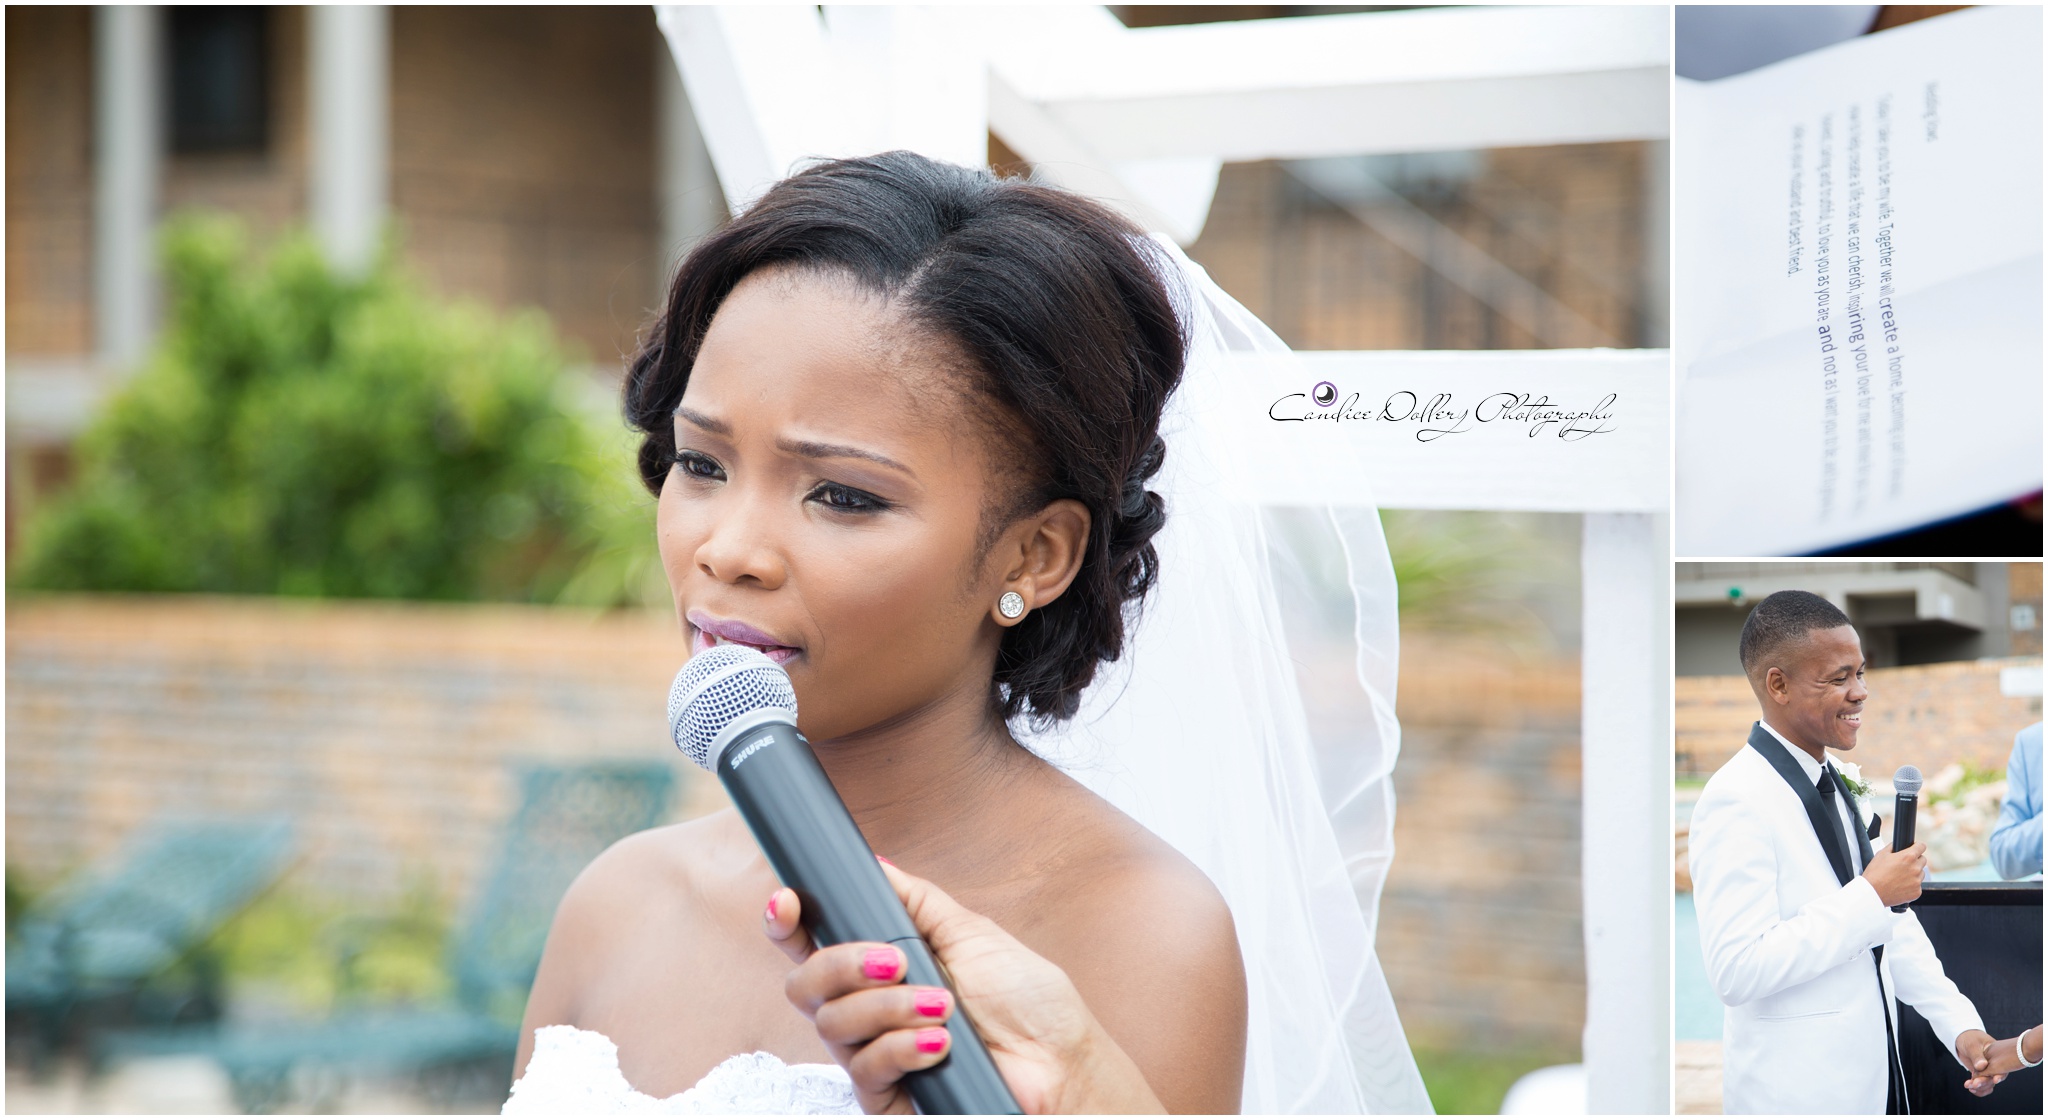 Asanda & Bonga's Wedding - Candice Dollery Photography_8211